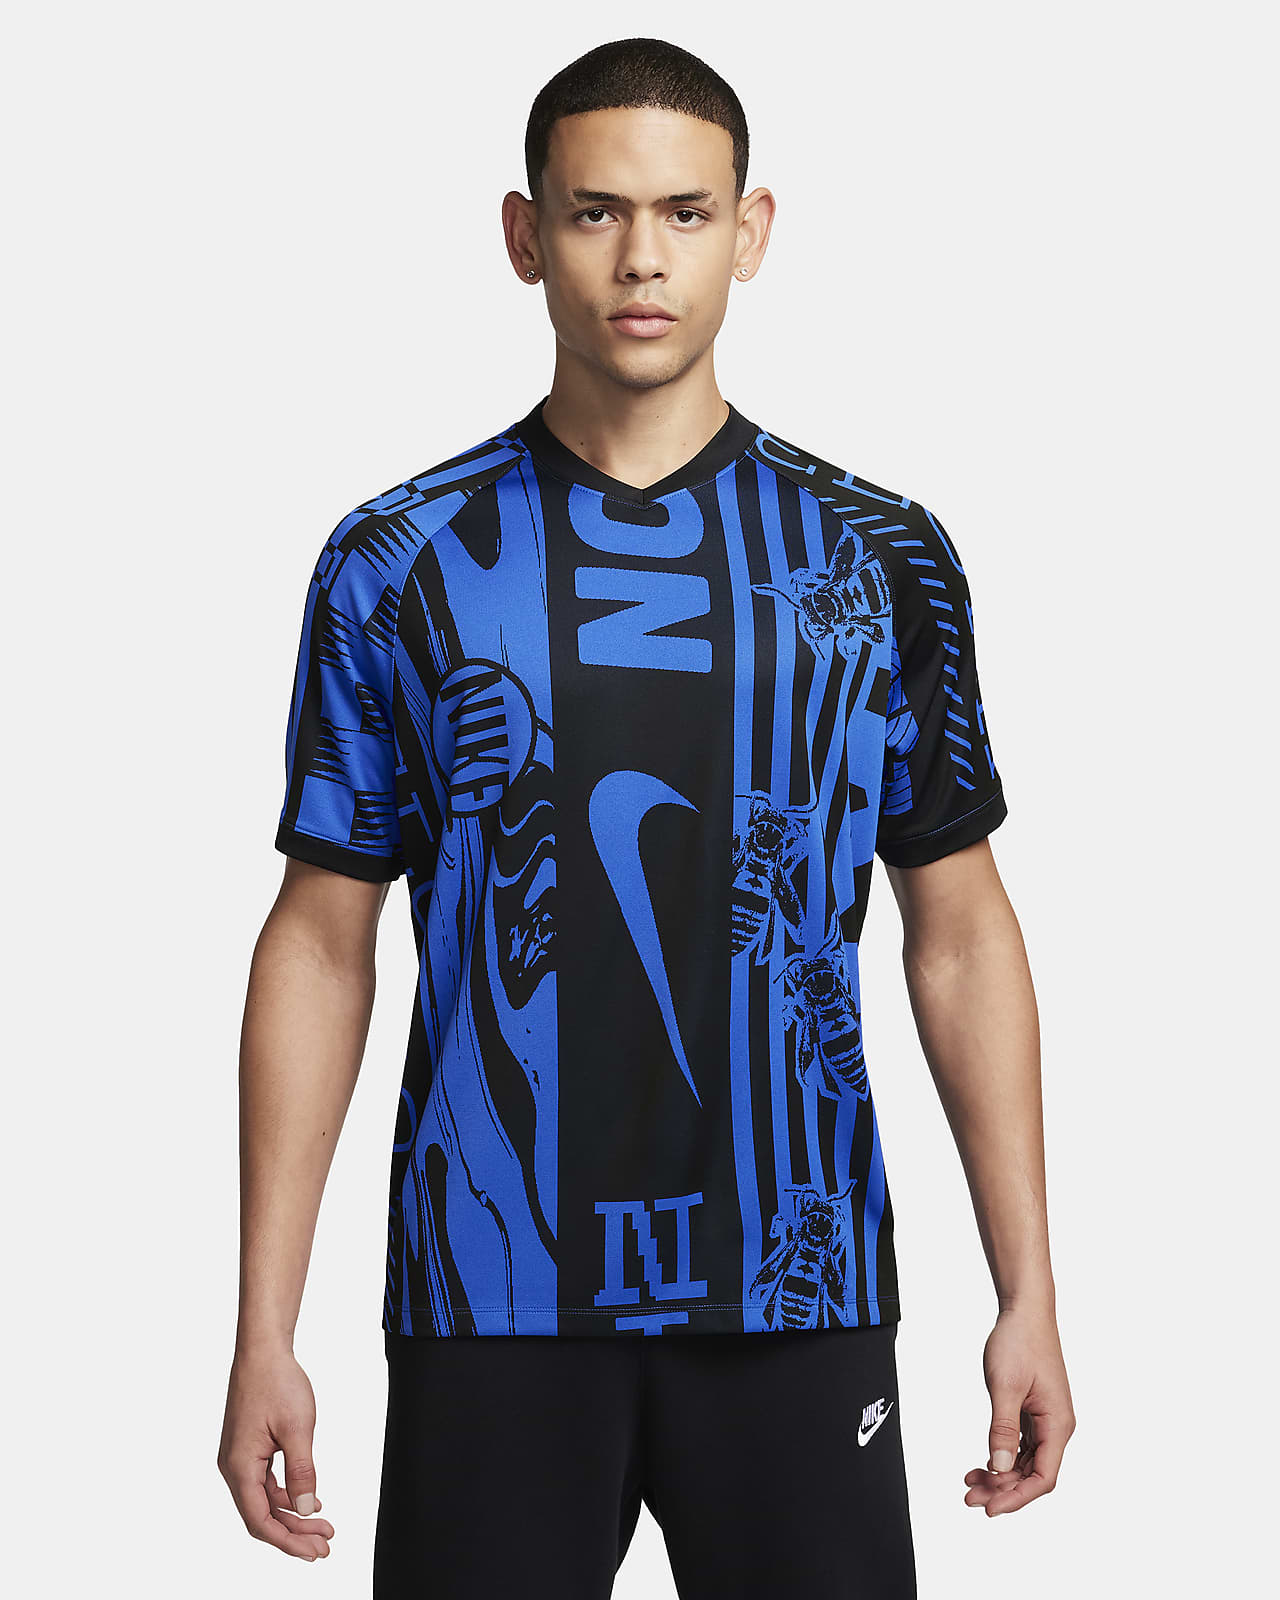 Nike Culture of Football Men's Dri-FIT Short-Sleeve Soccer Jersey